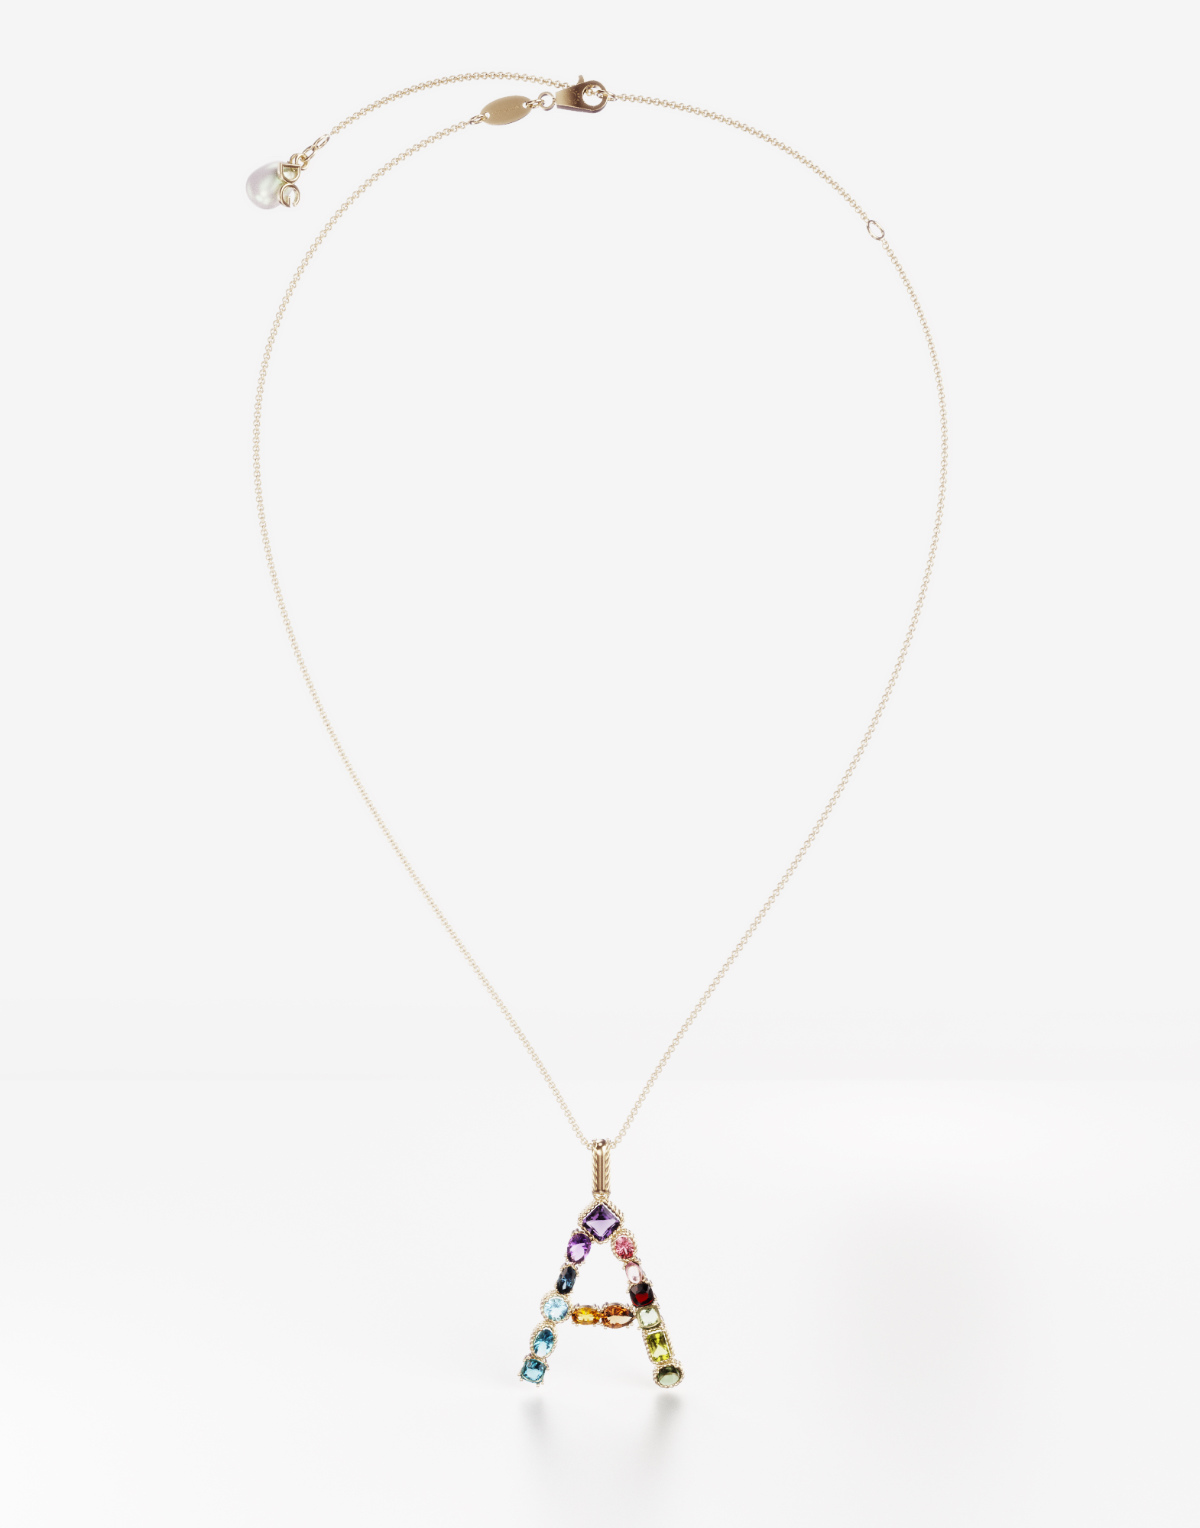 Dolce&Gabbana Fine Jewellery: the Alphabet Collection